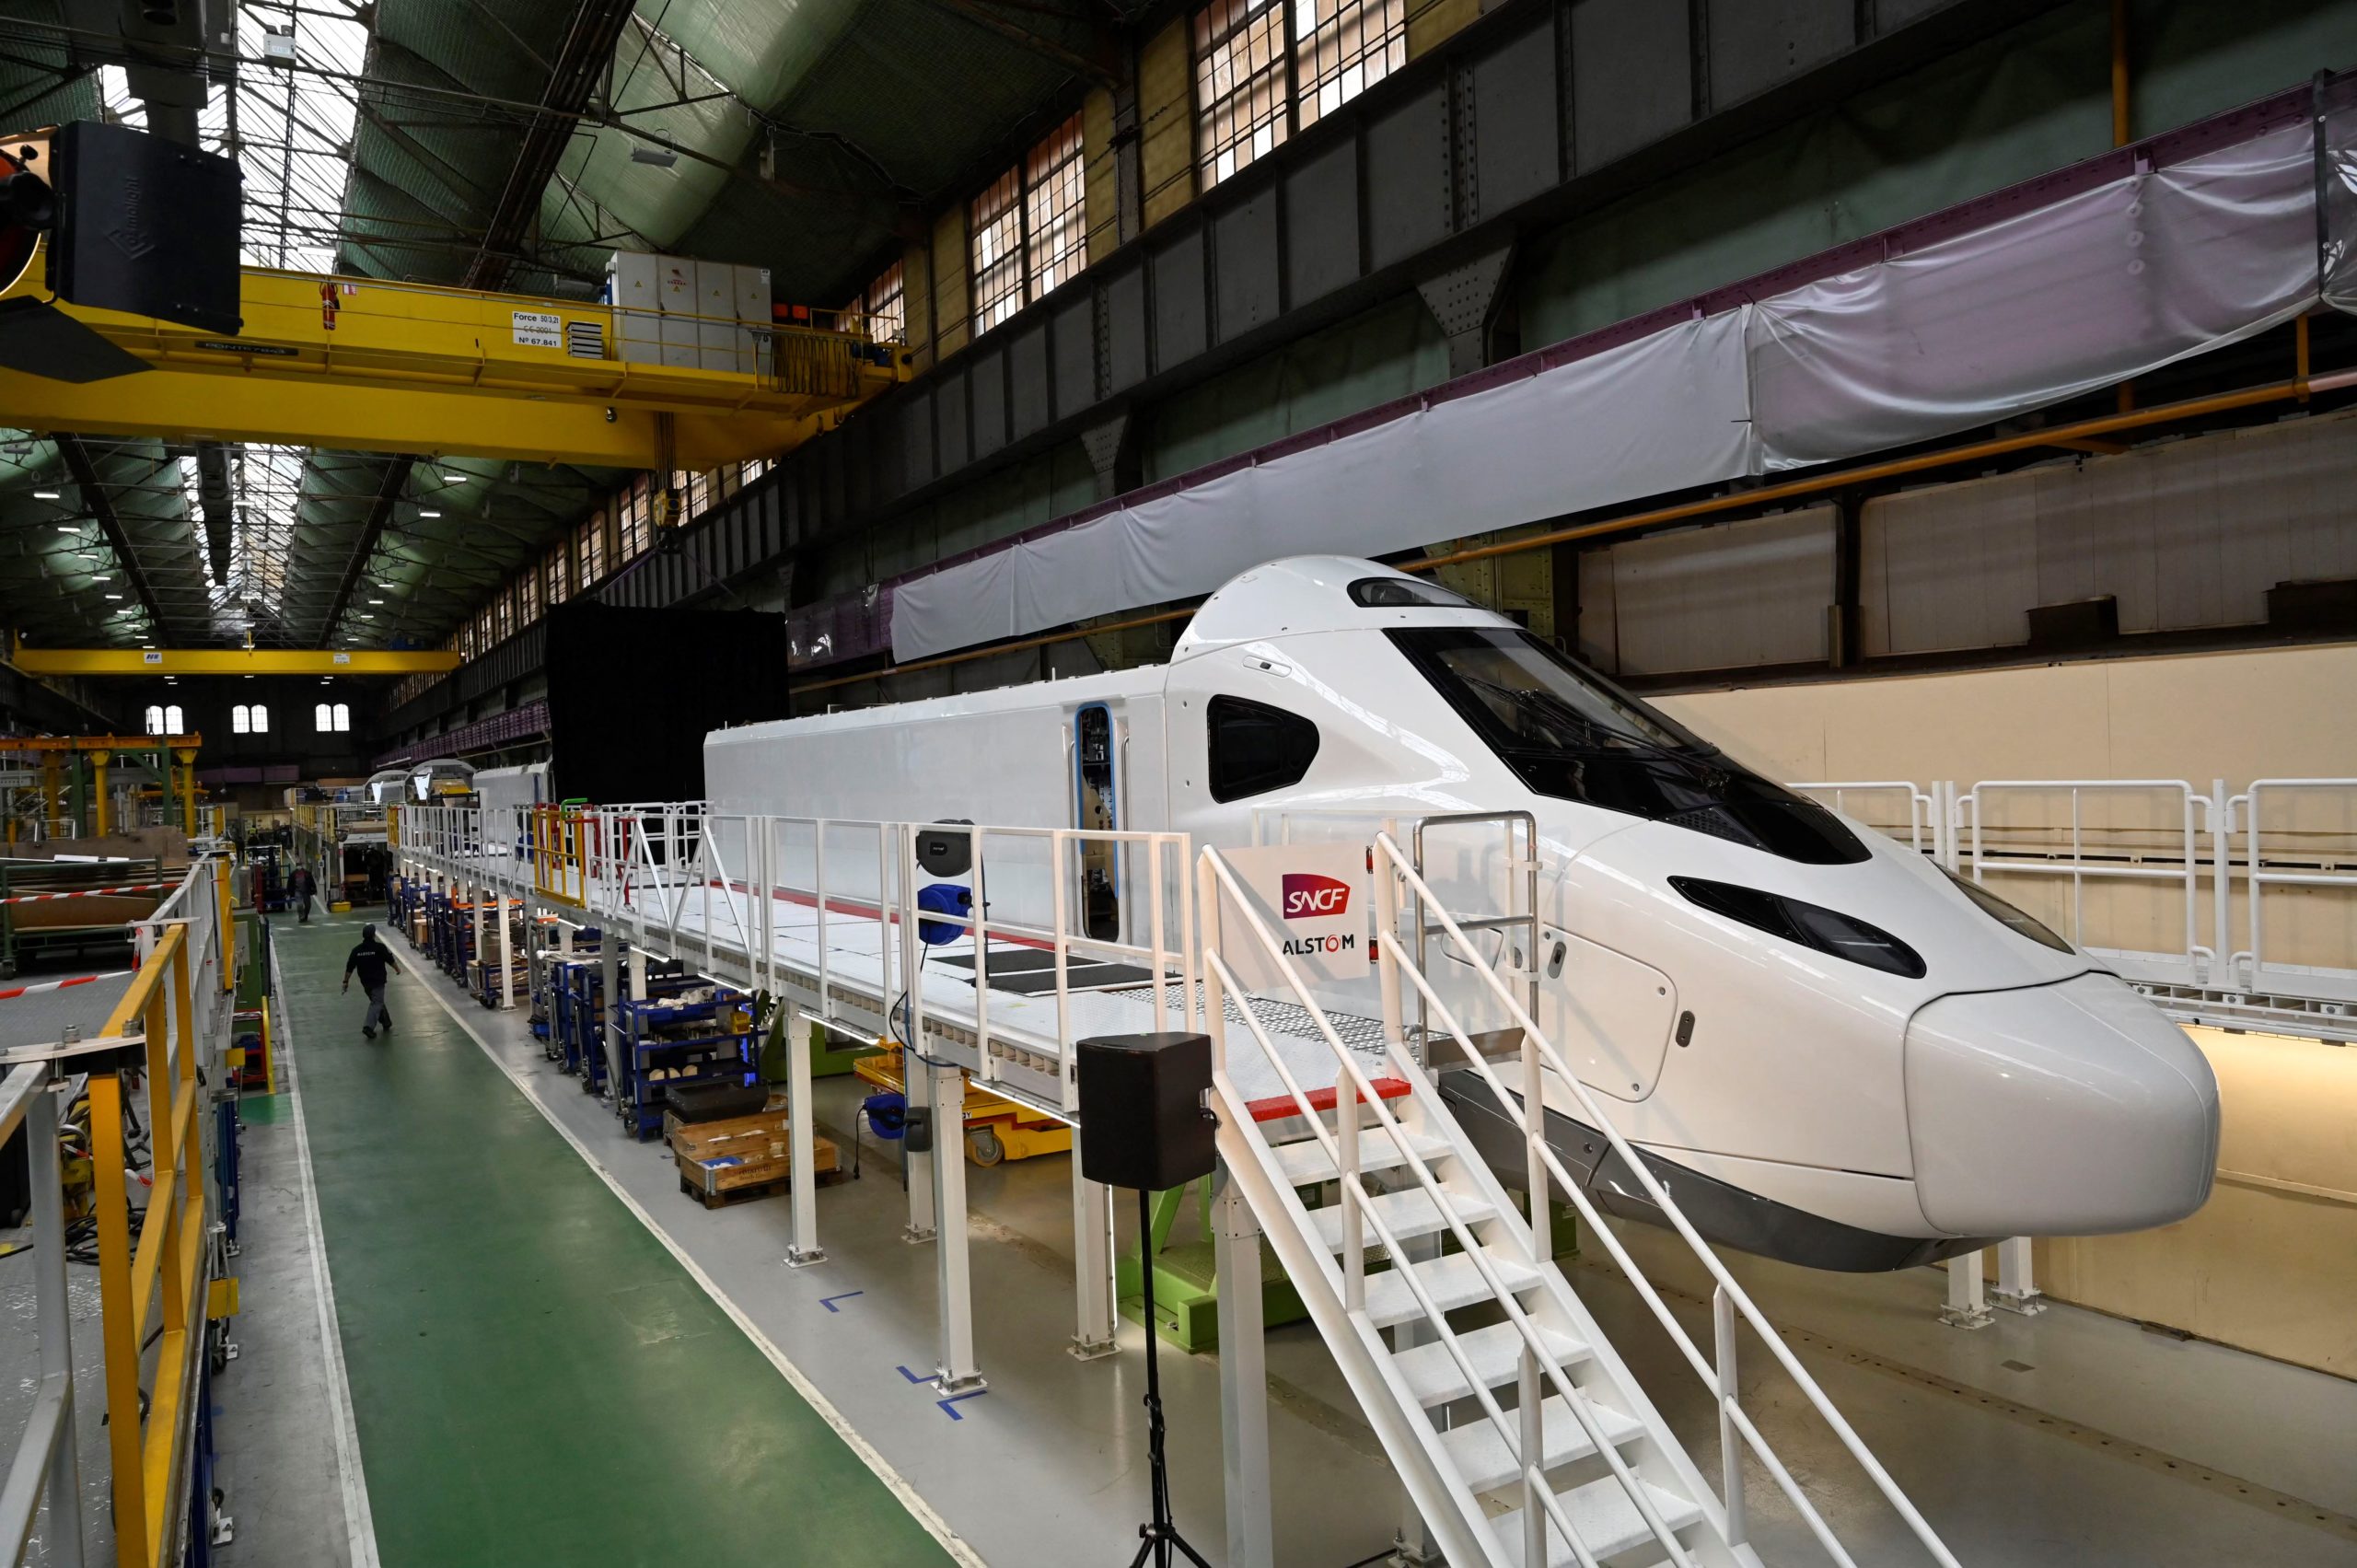 Alstom unveils production line for new TGV trains